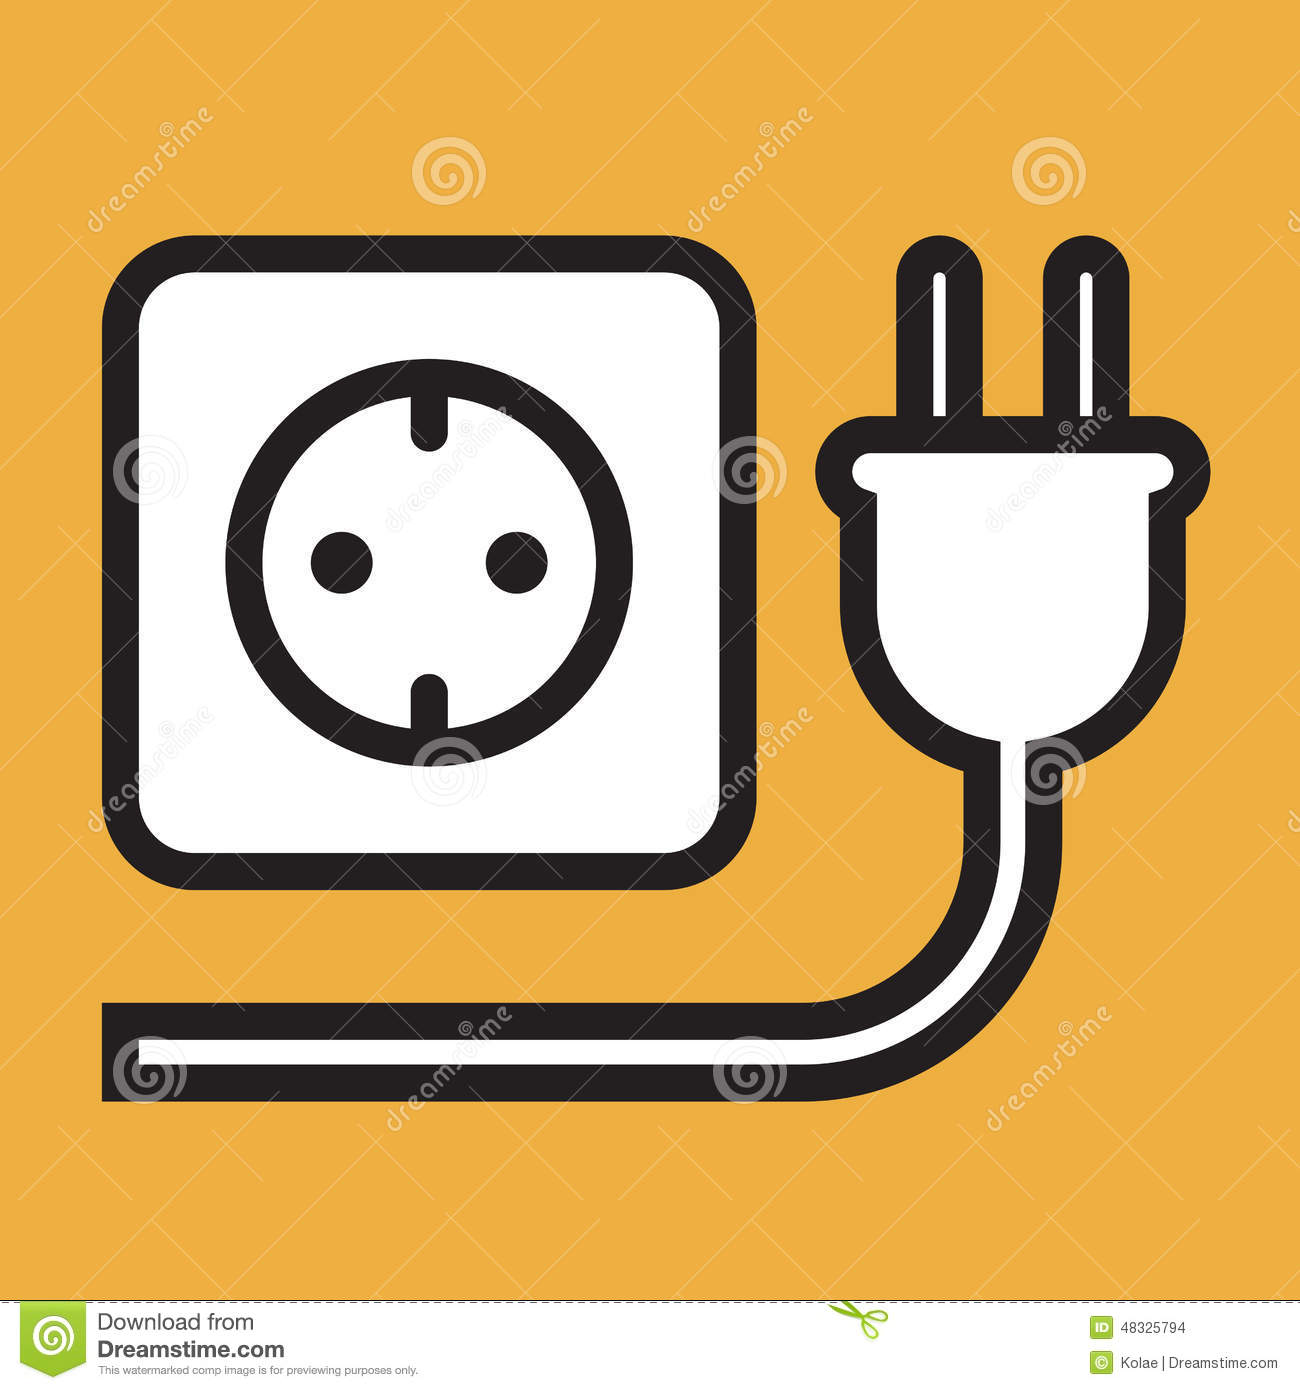 Plug And Socket Icon On Yellow Background 